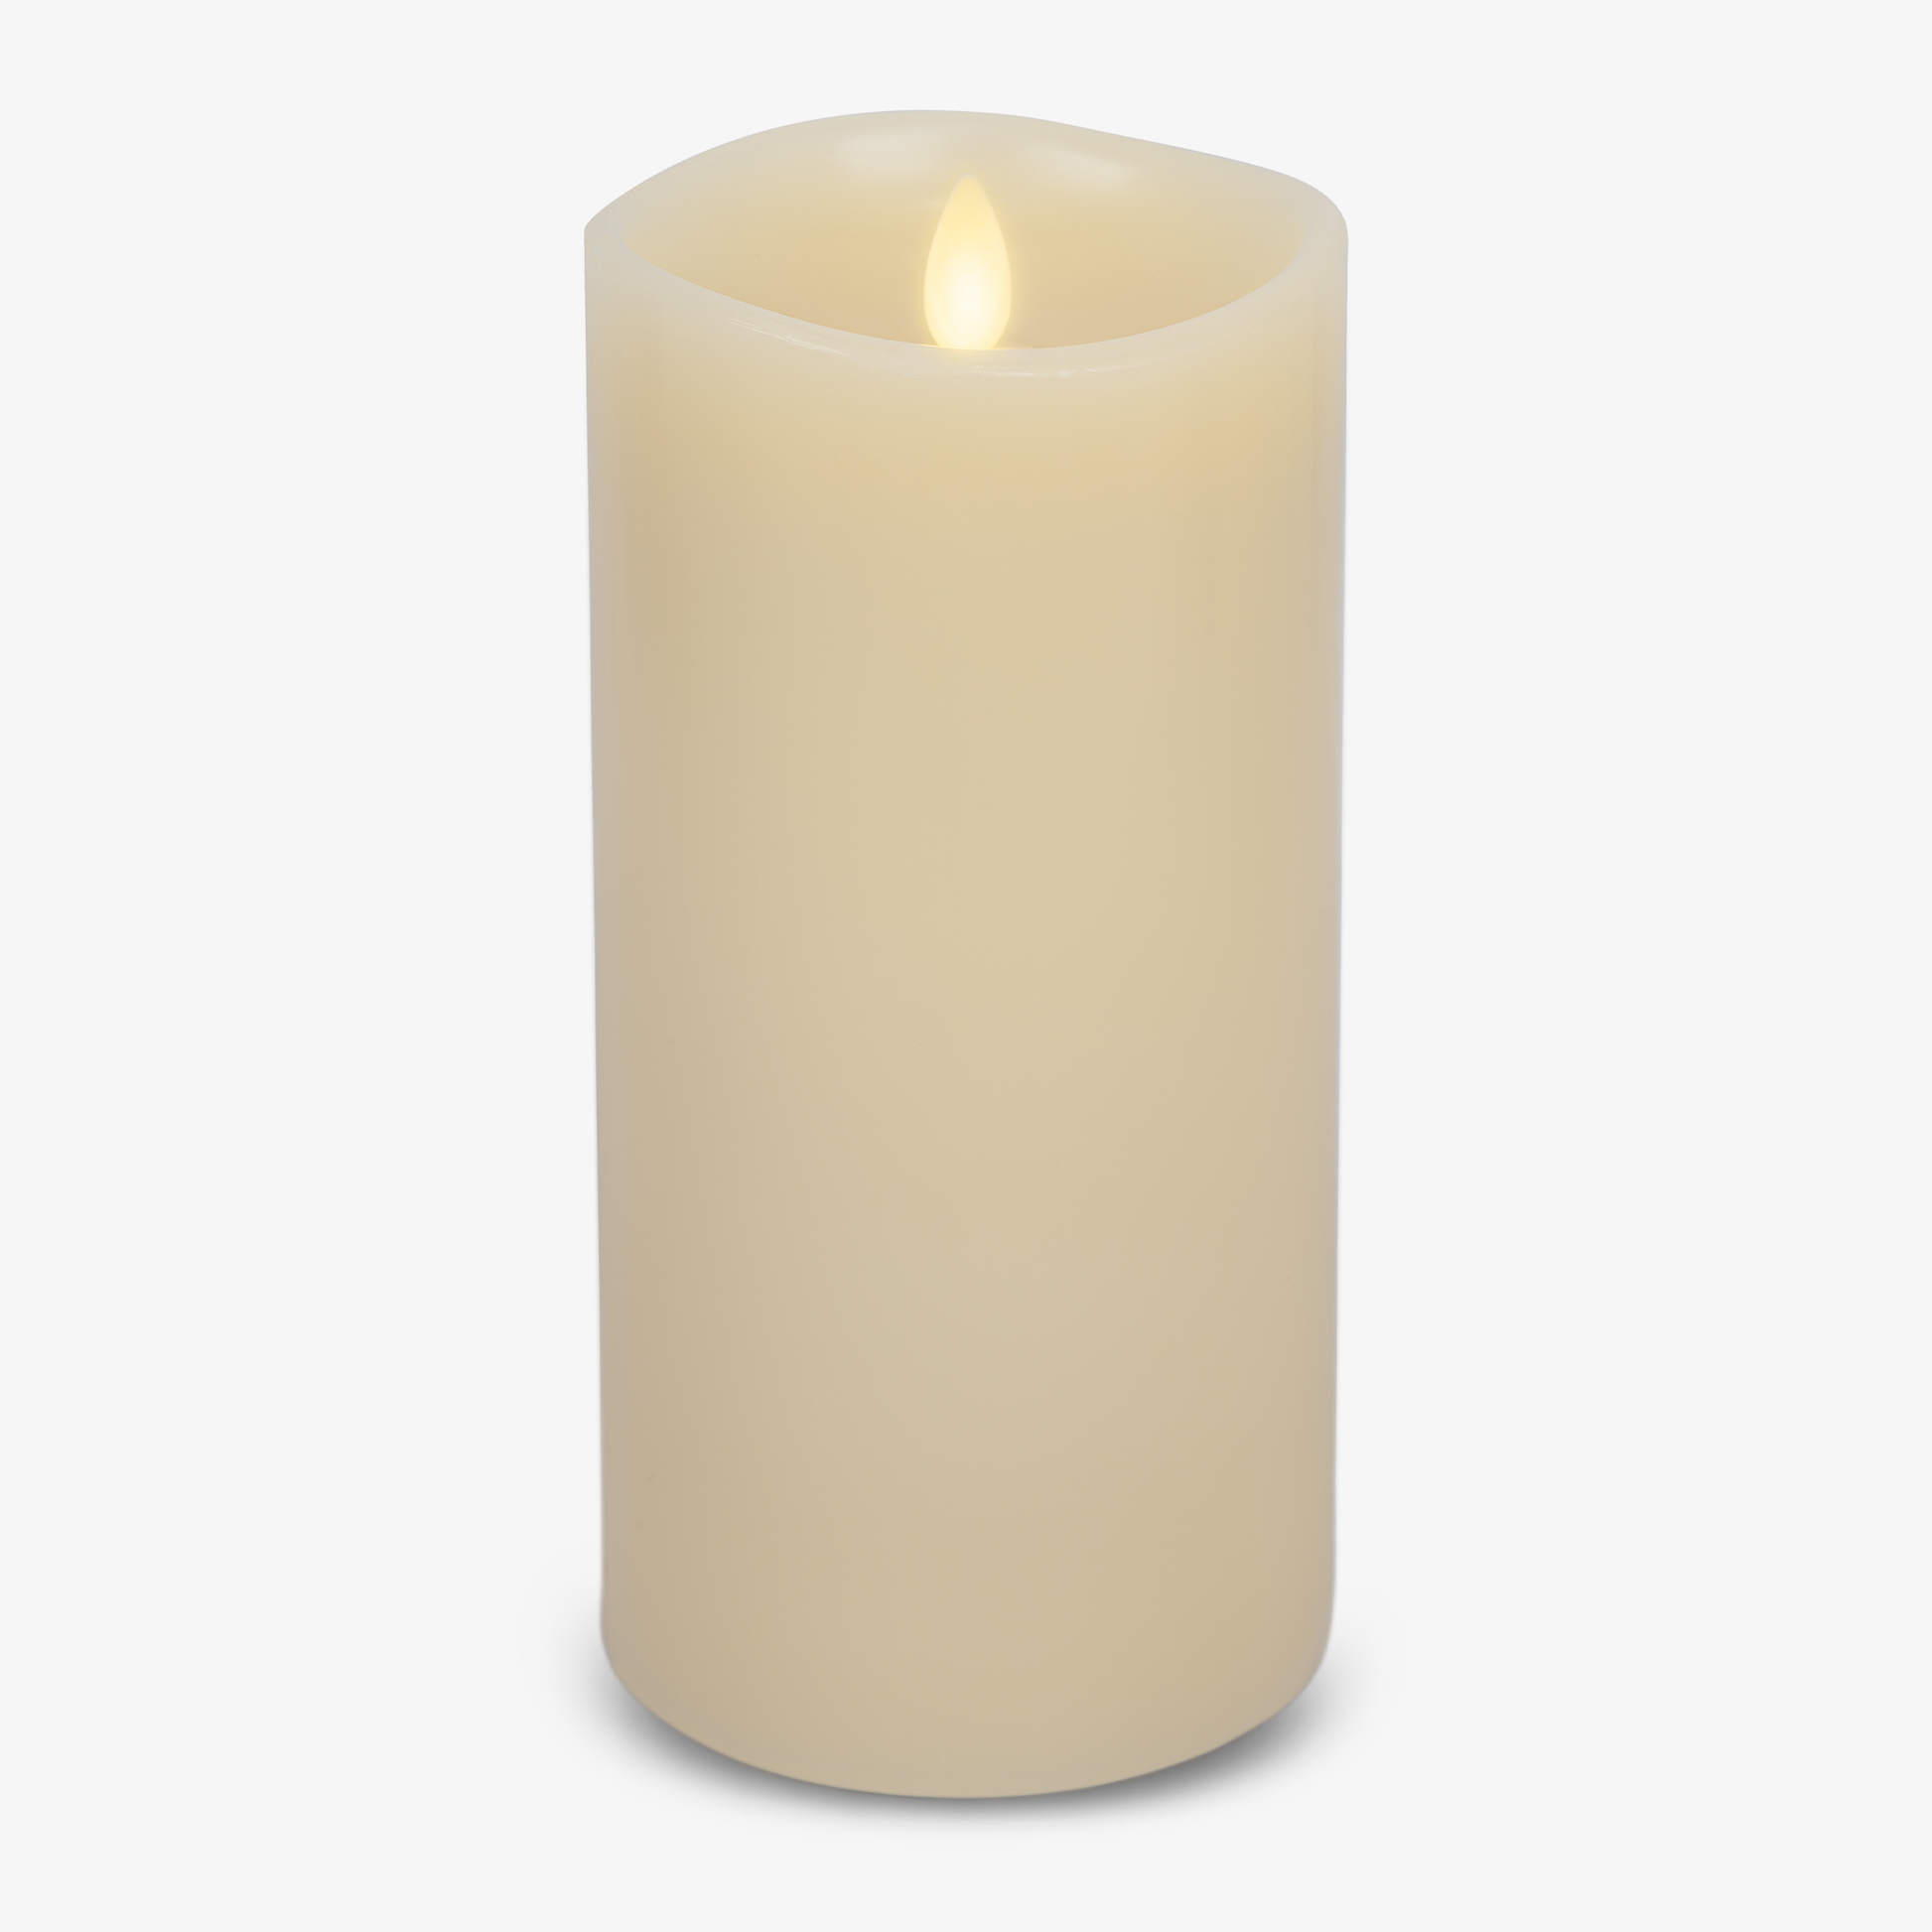 an image of Luminara's ivory fragrance diffusing flameless candle pillar